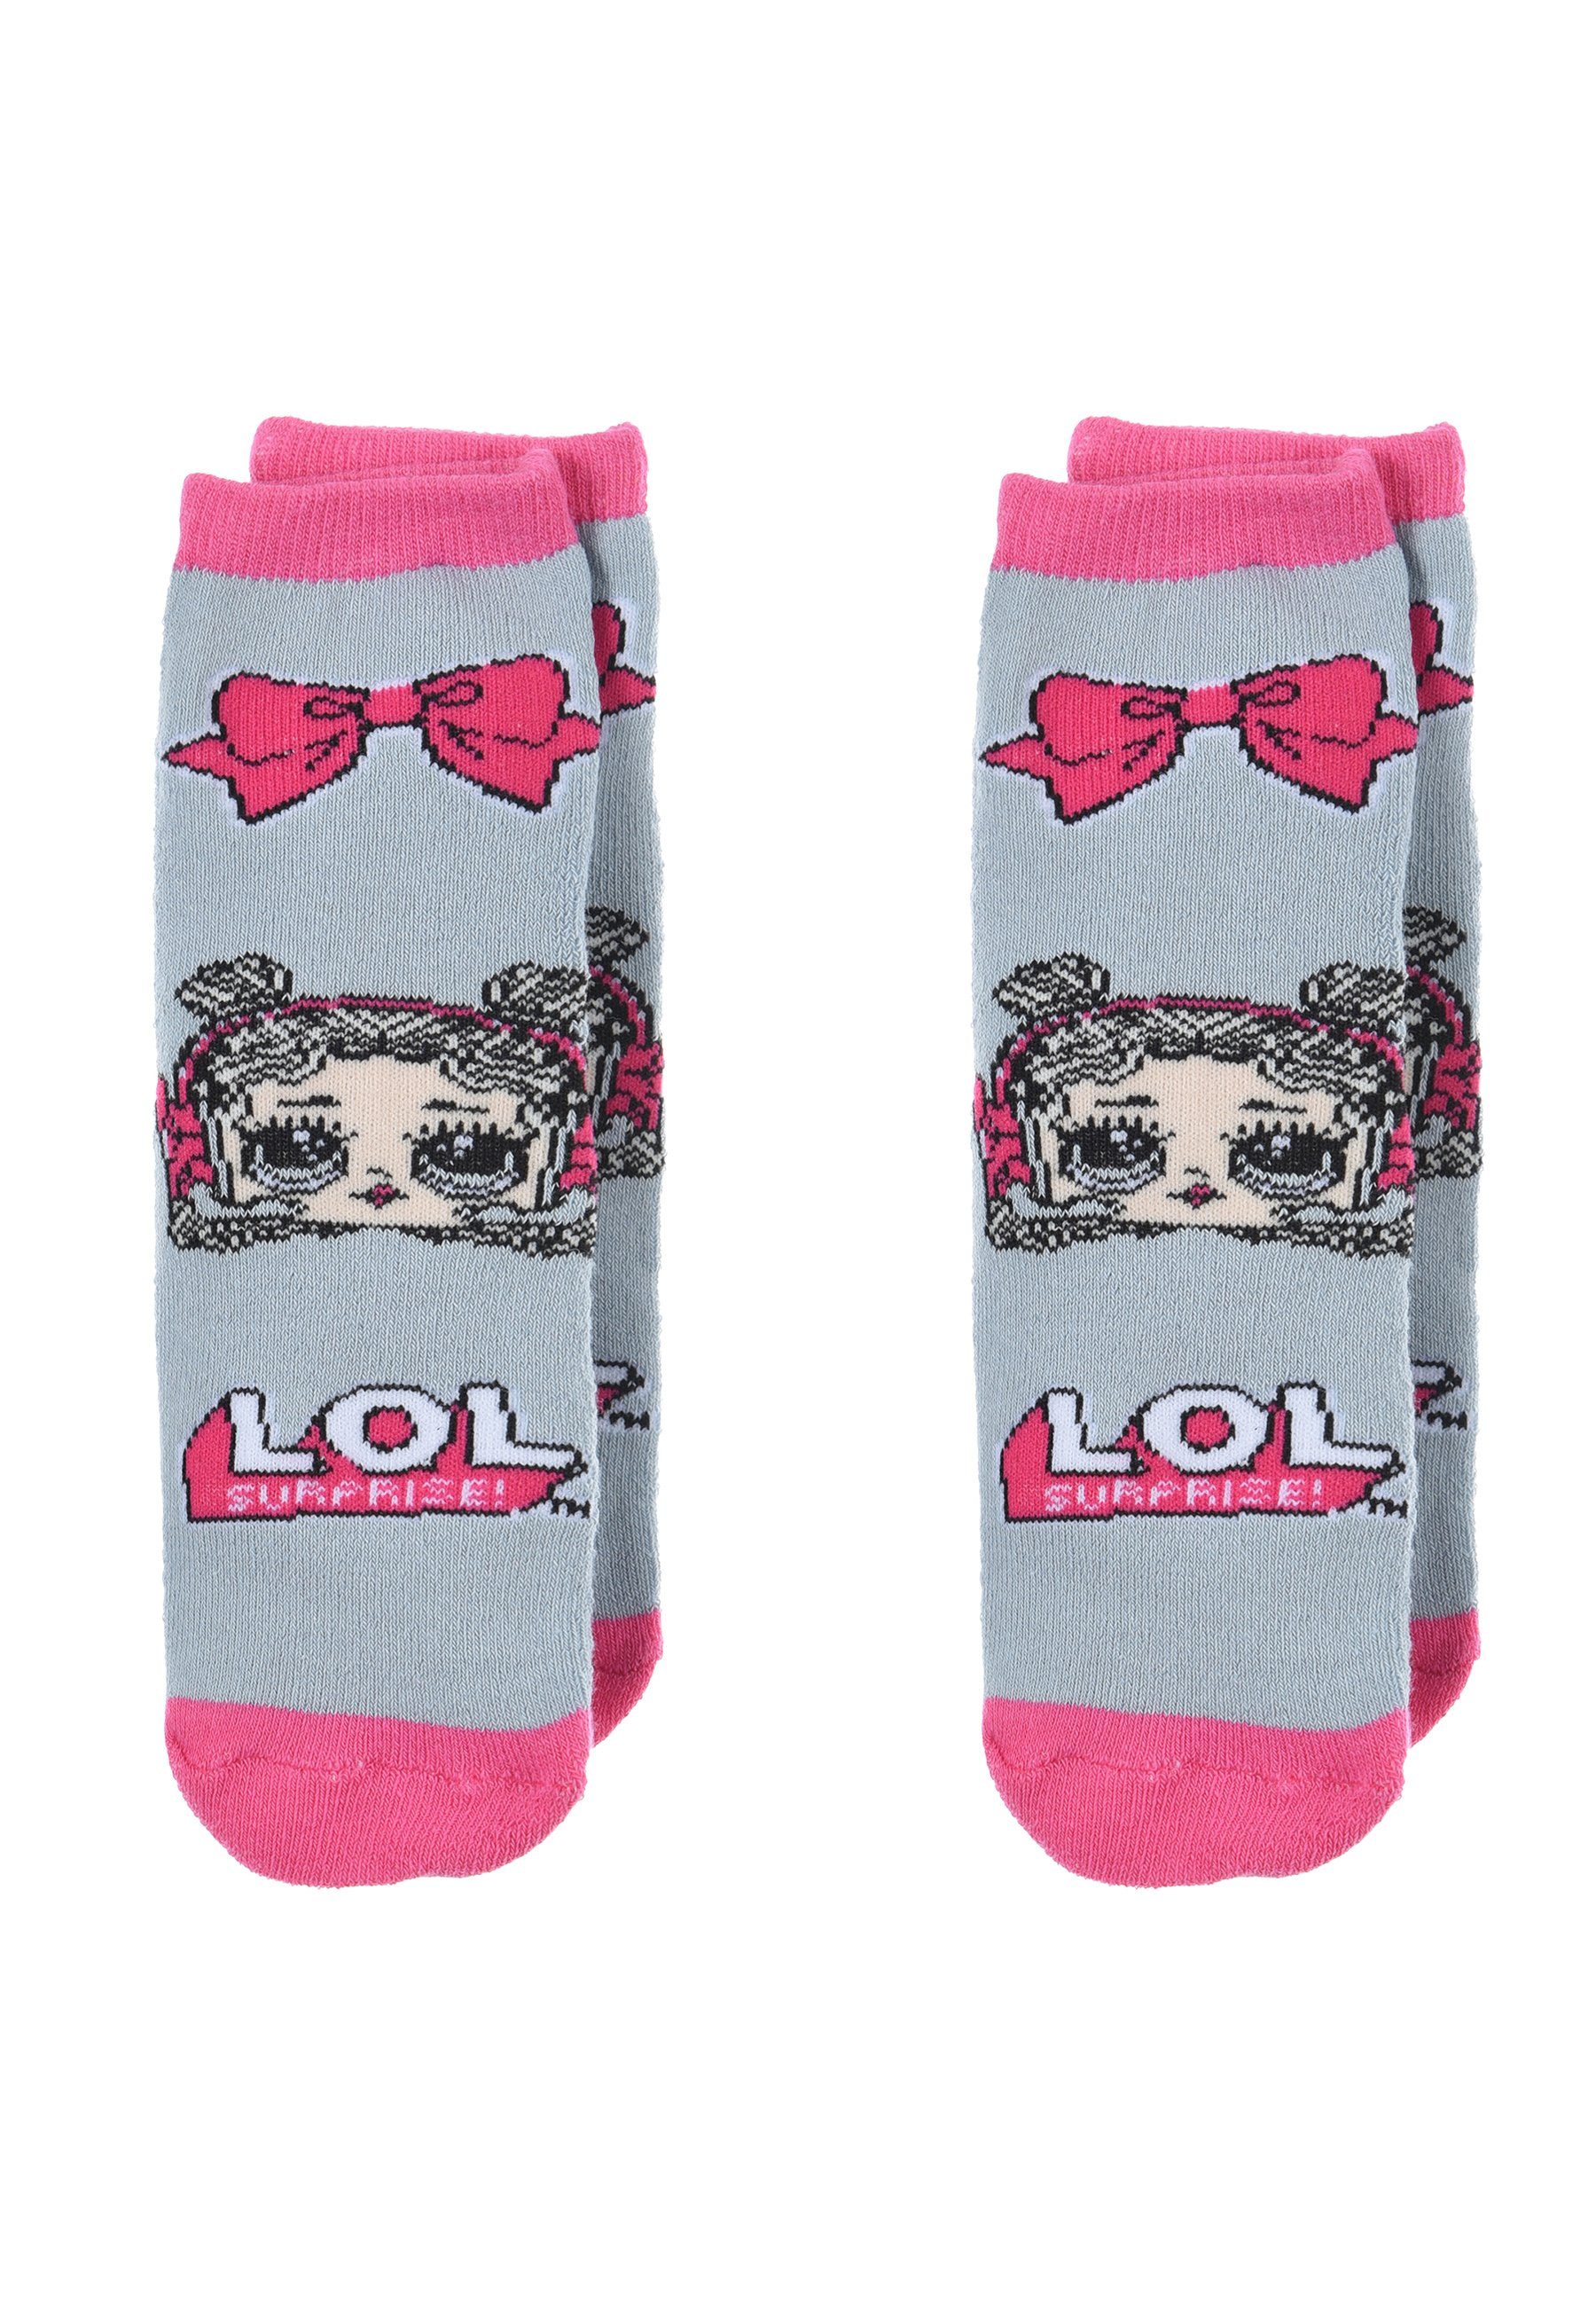 L.O.L. SURPRISE! ABS-Socken Kinder Mädchen anti-rutsch Noppen Gumminoppen mit 2 Stopper-Socken Socken Paar Strümpfe (2-Paar)